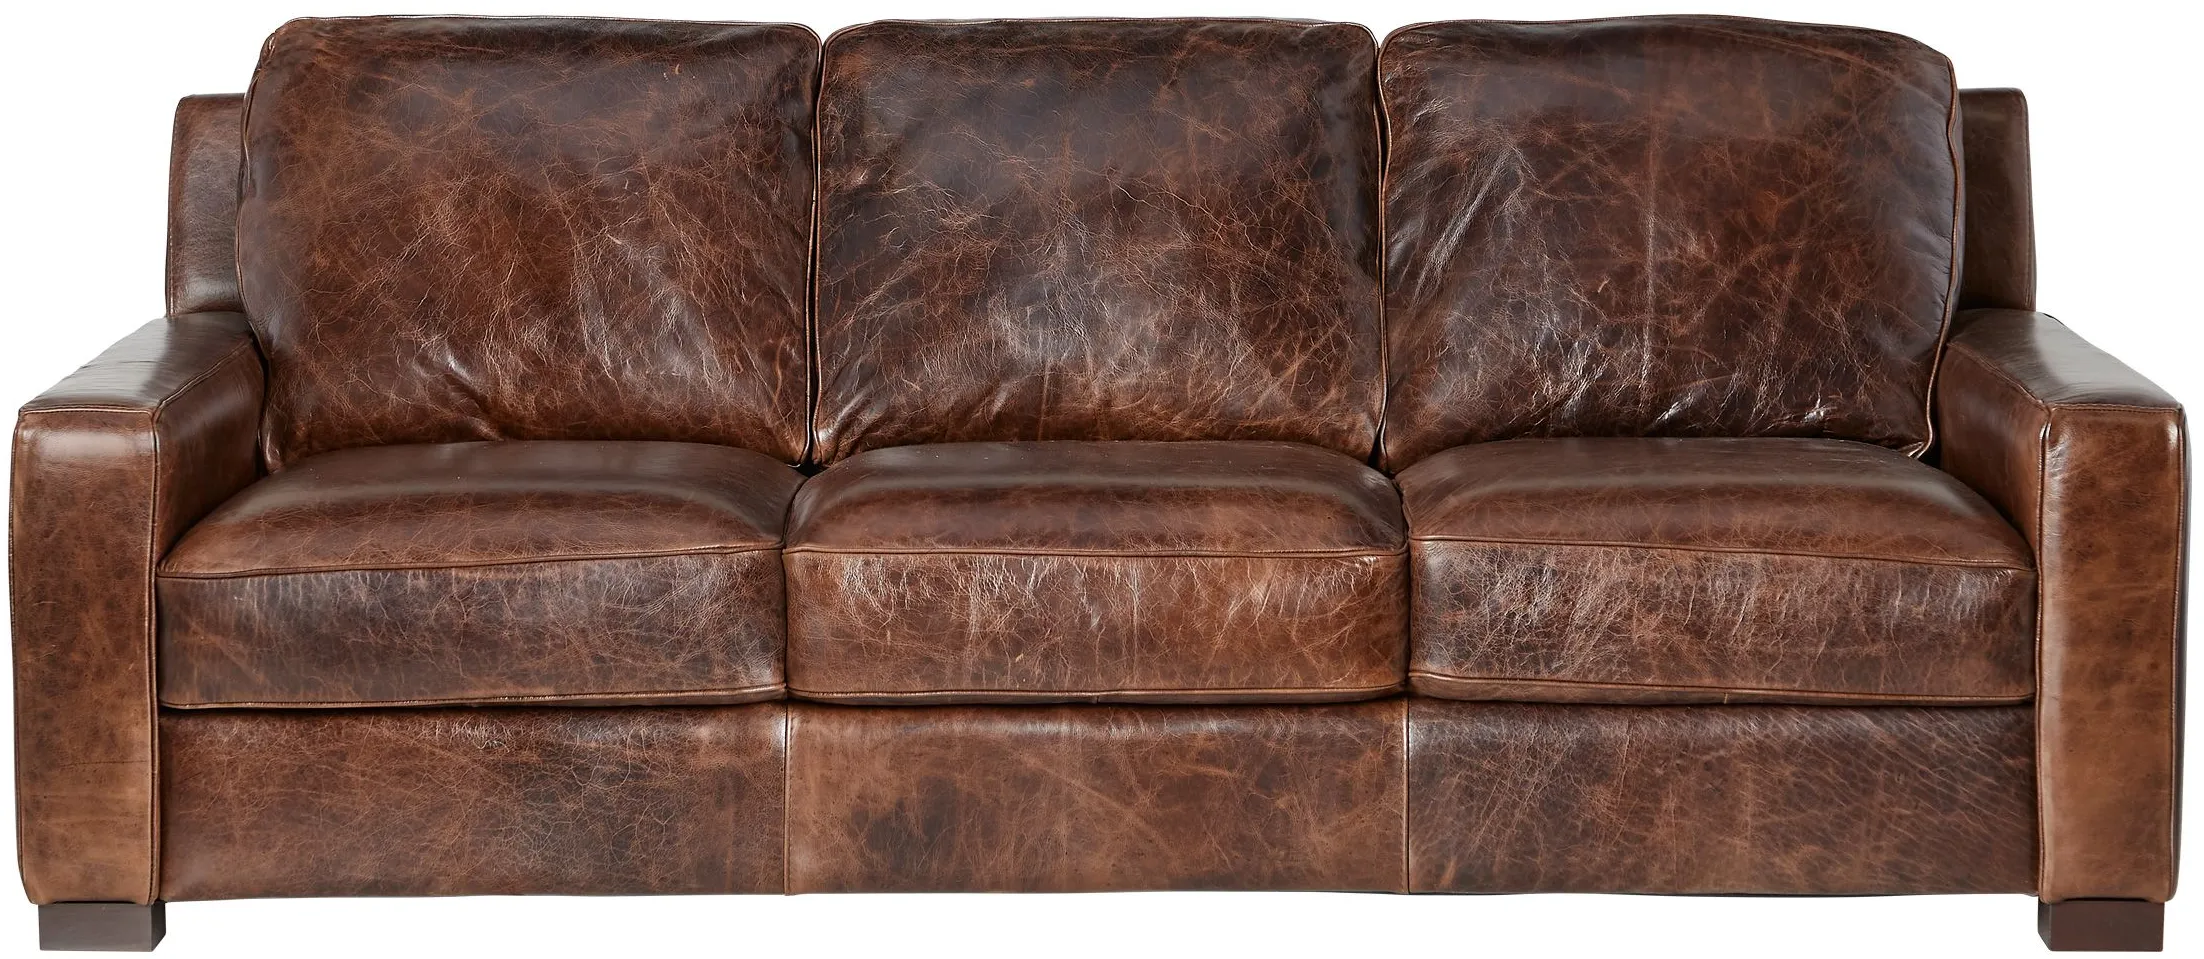 Kensington Chestnut Leather Sofa